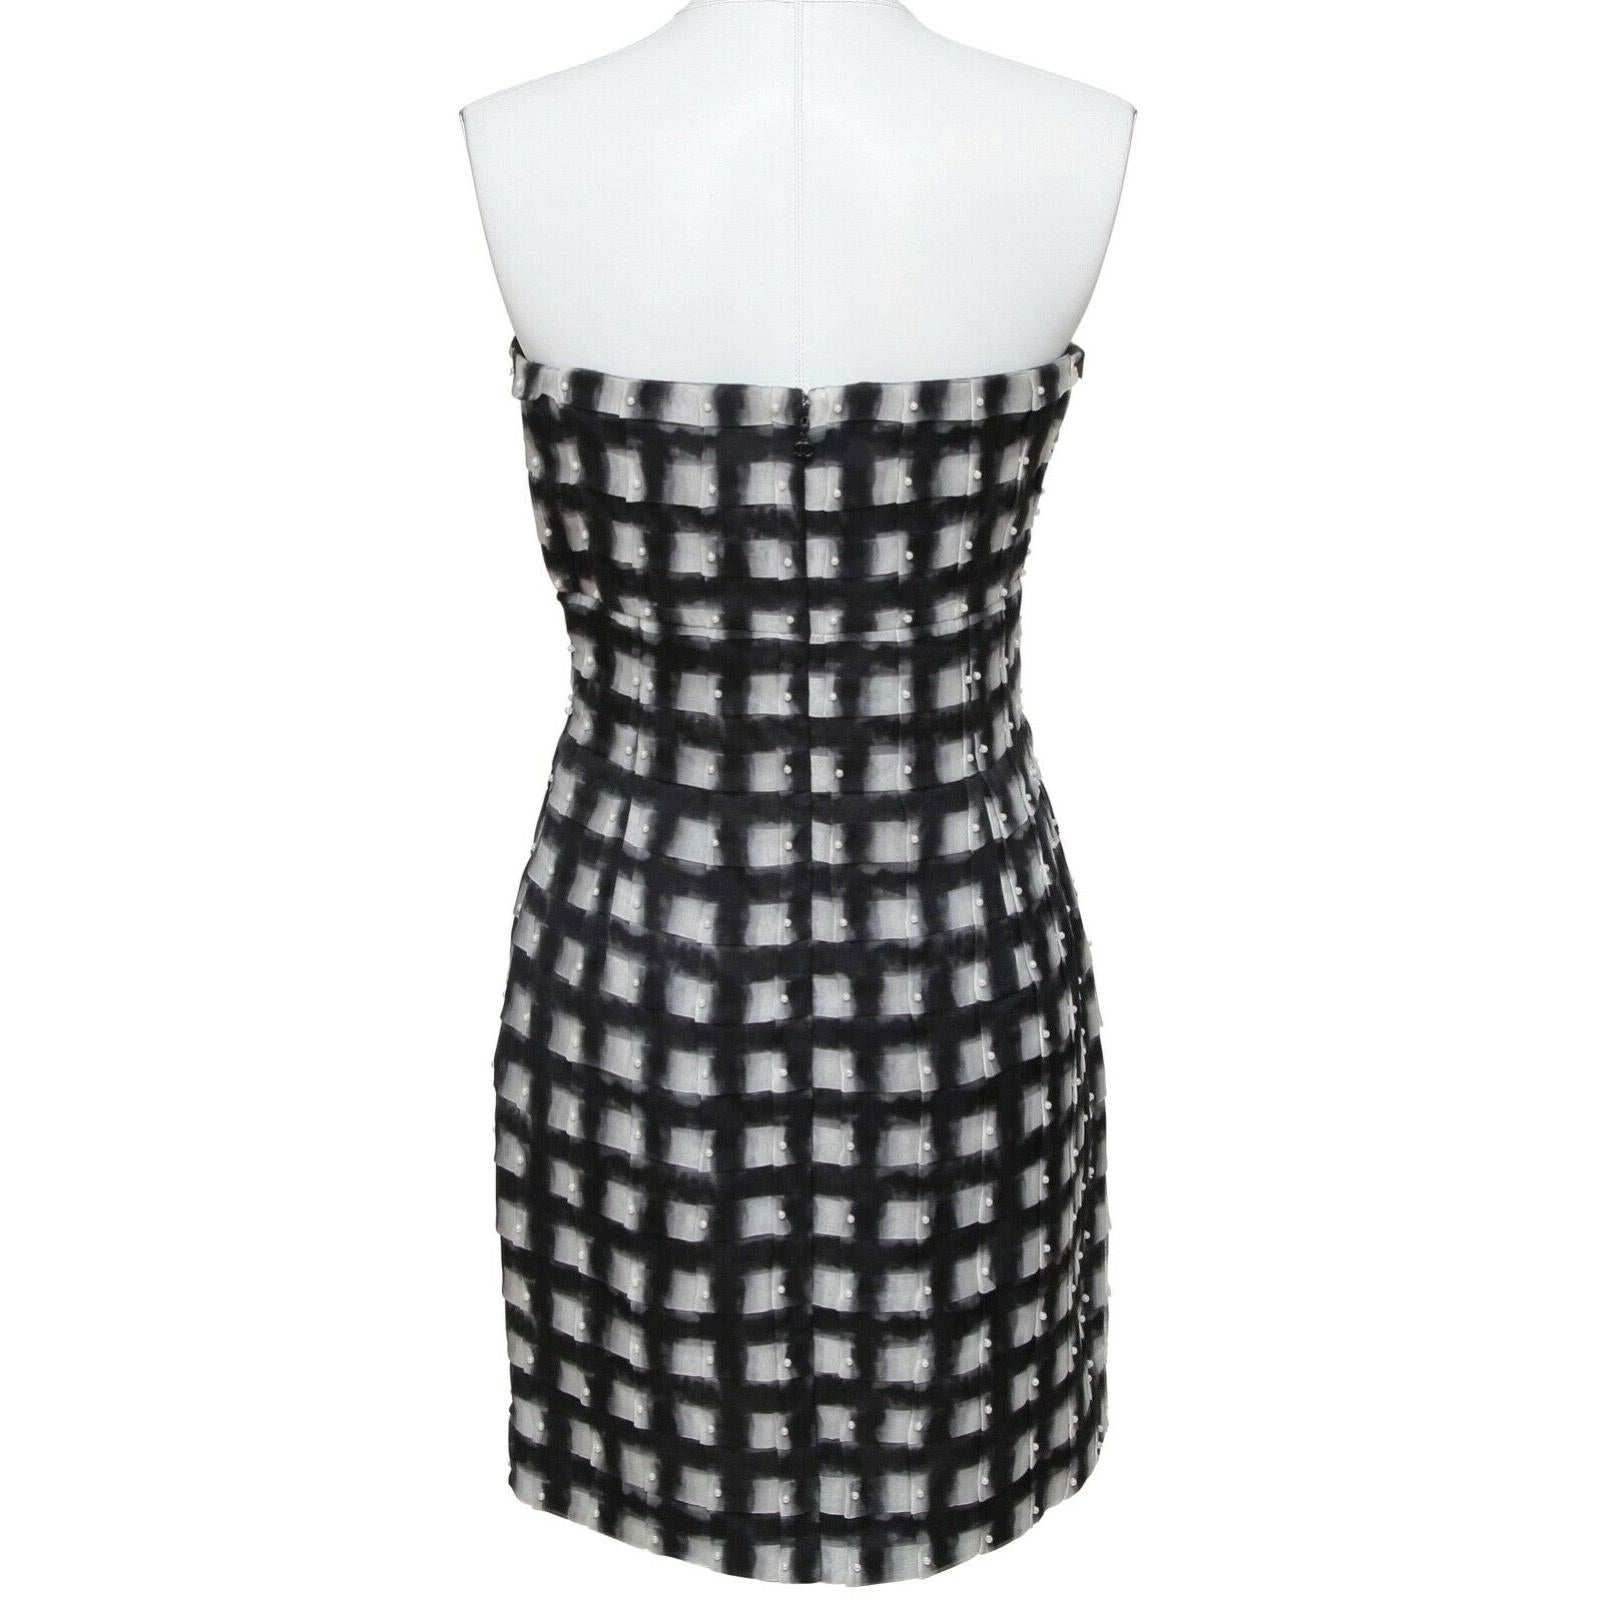 CHANEL Strapless Dress Pearls Black Checkered White RUNWAY 2013 Sz 38 2